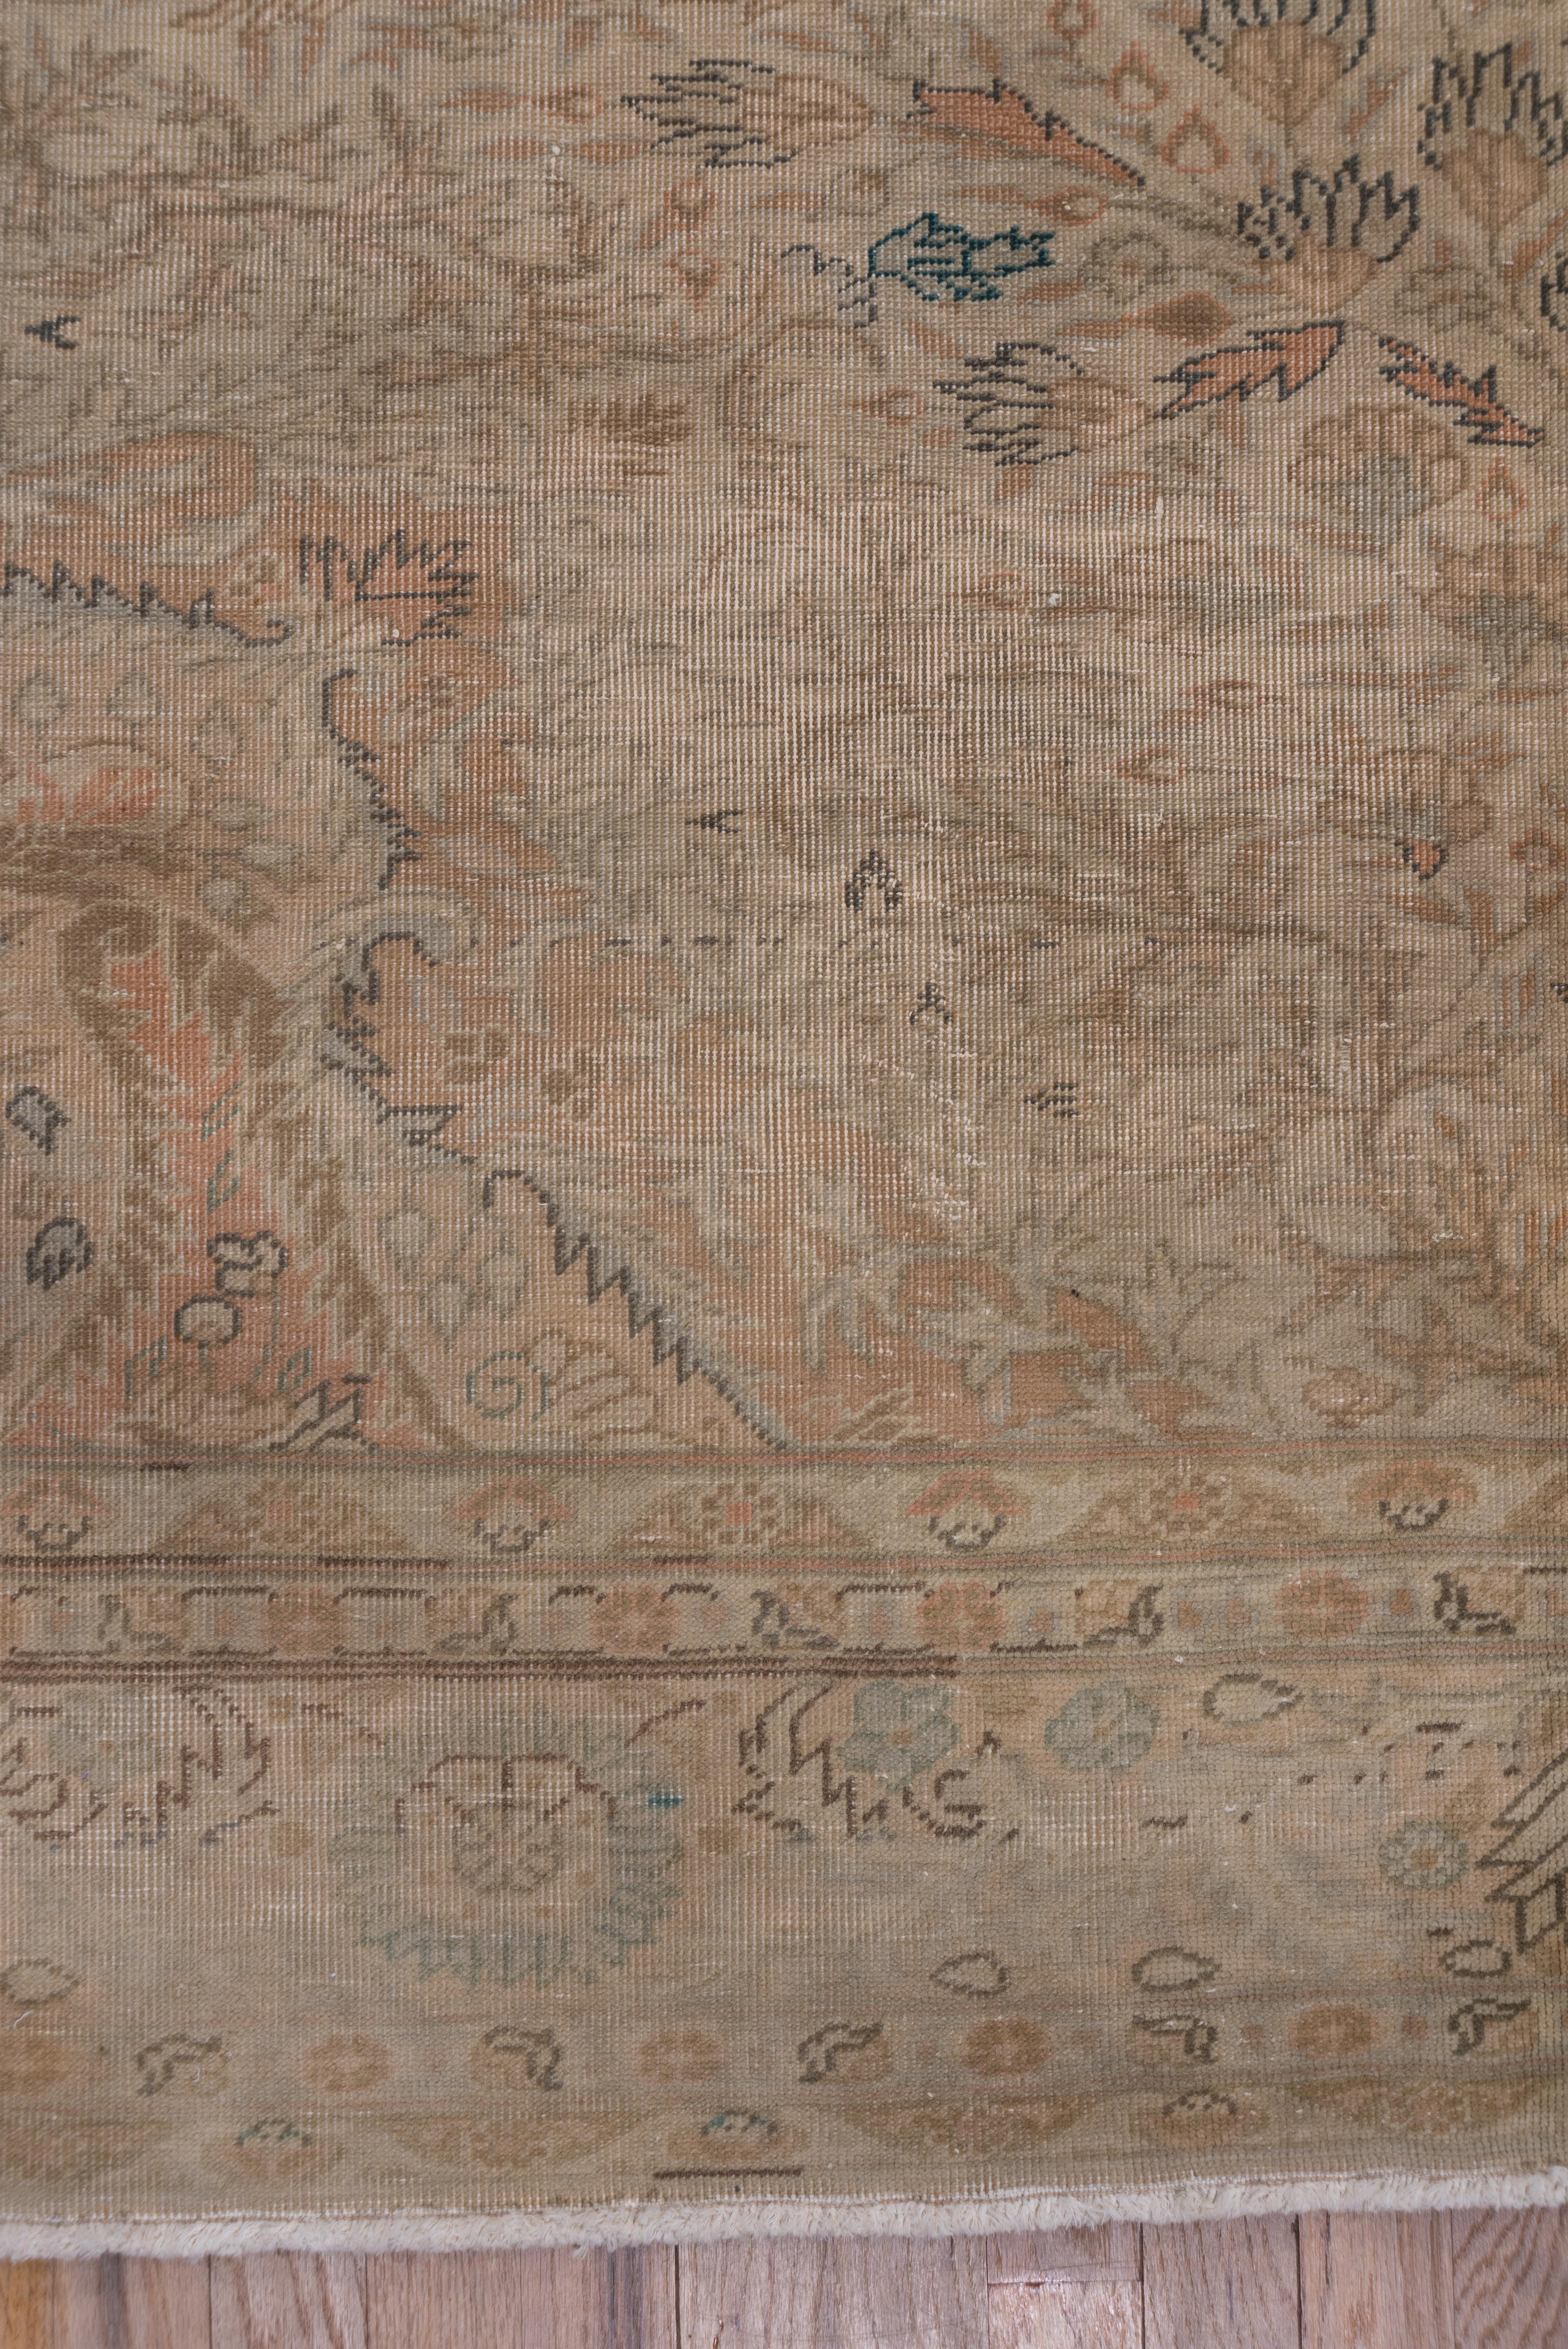 Antique Turkish Kaisary Carpet, Earth Tones 1